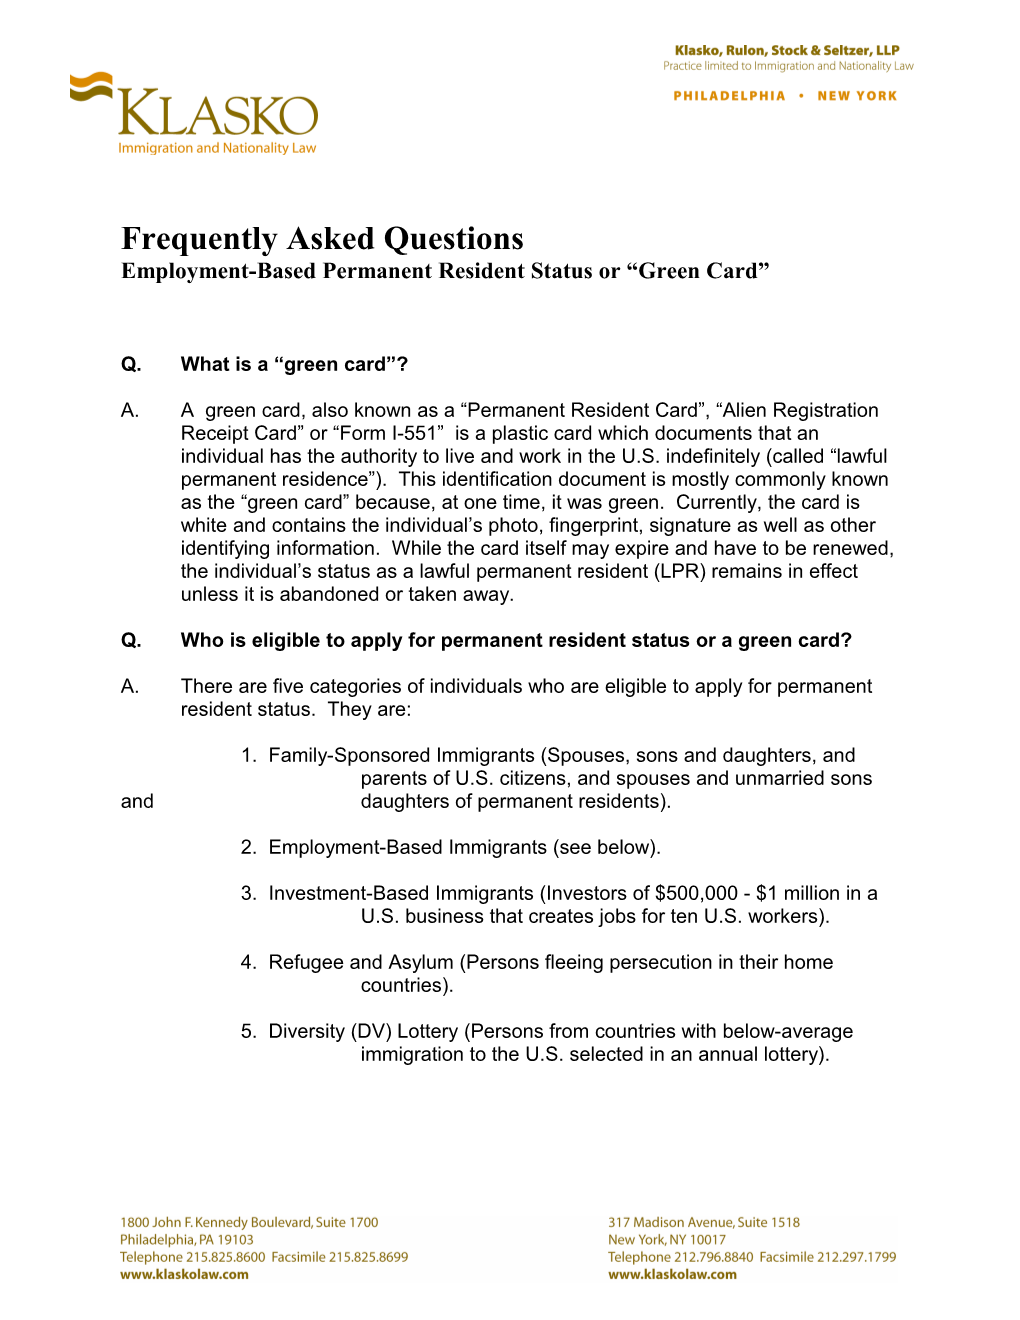 HRK/Aaz FAQ - Employment-Basedpermanent Res.Status Or Green (00000289;1)